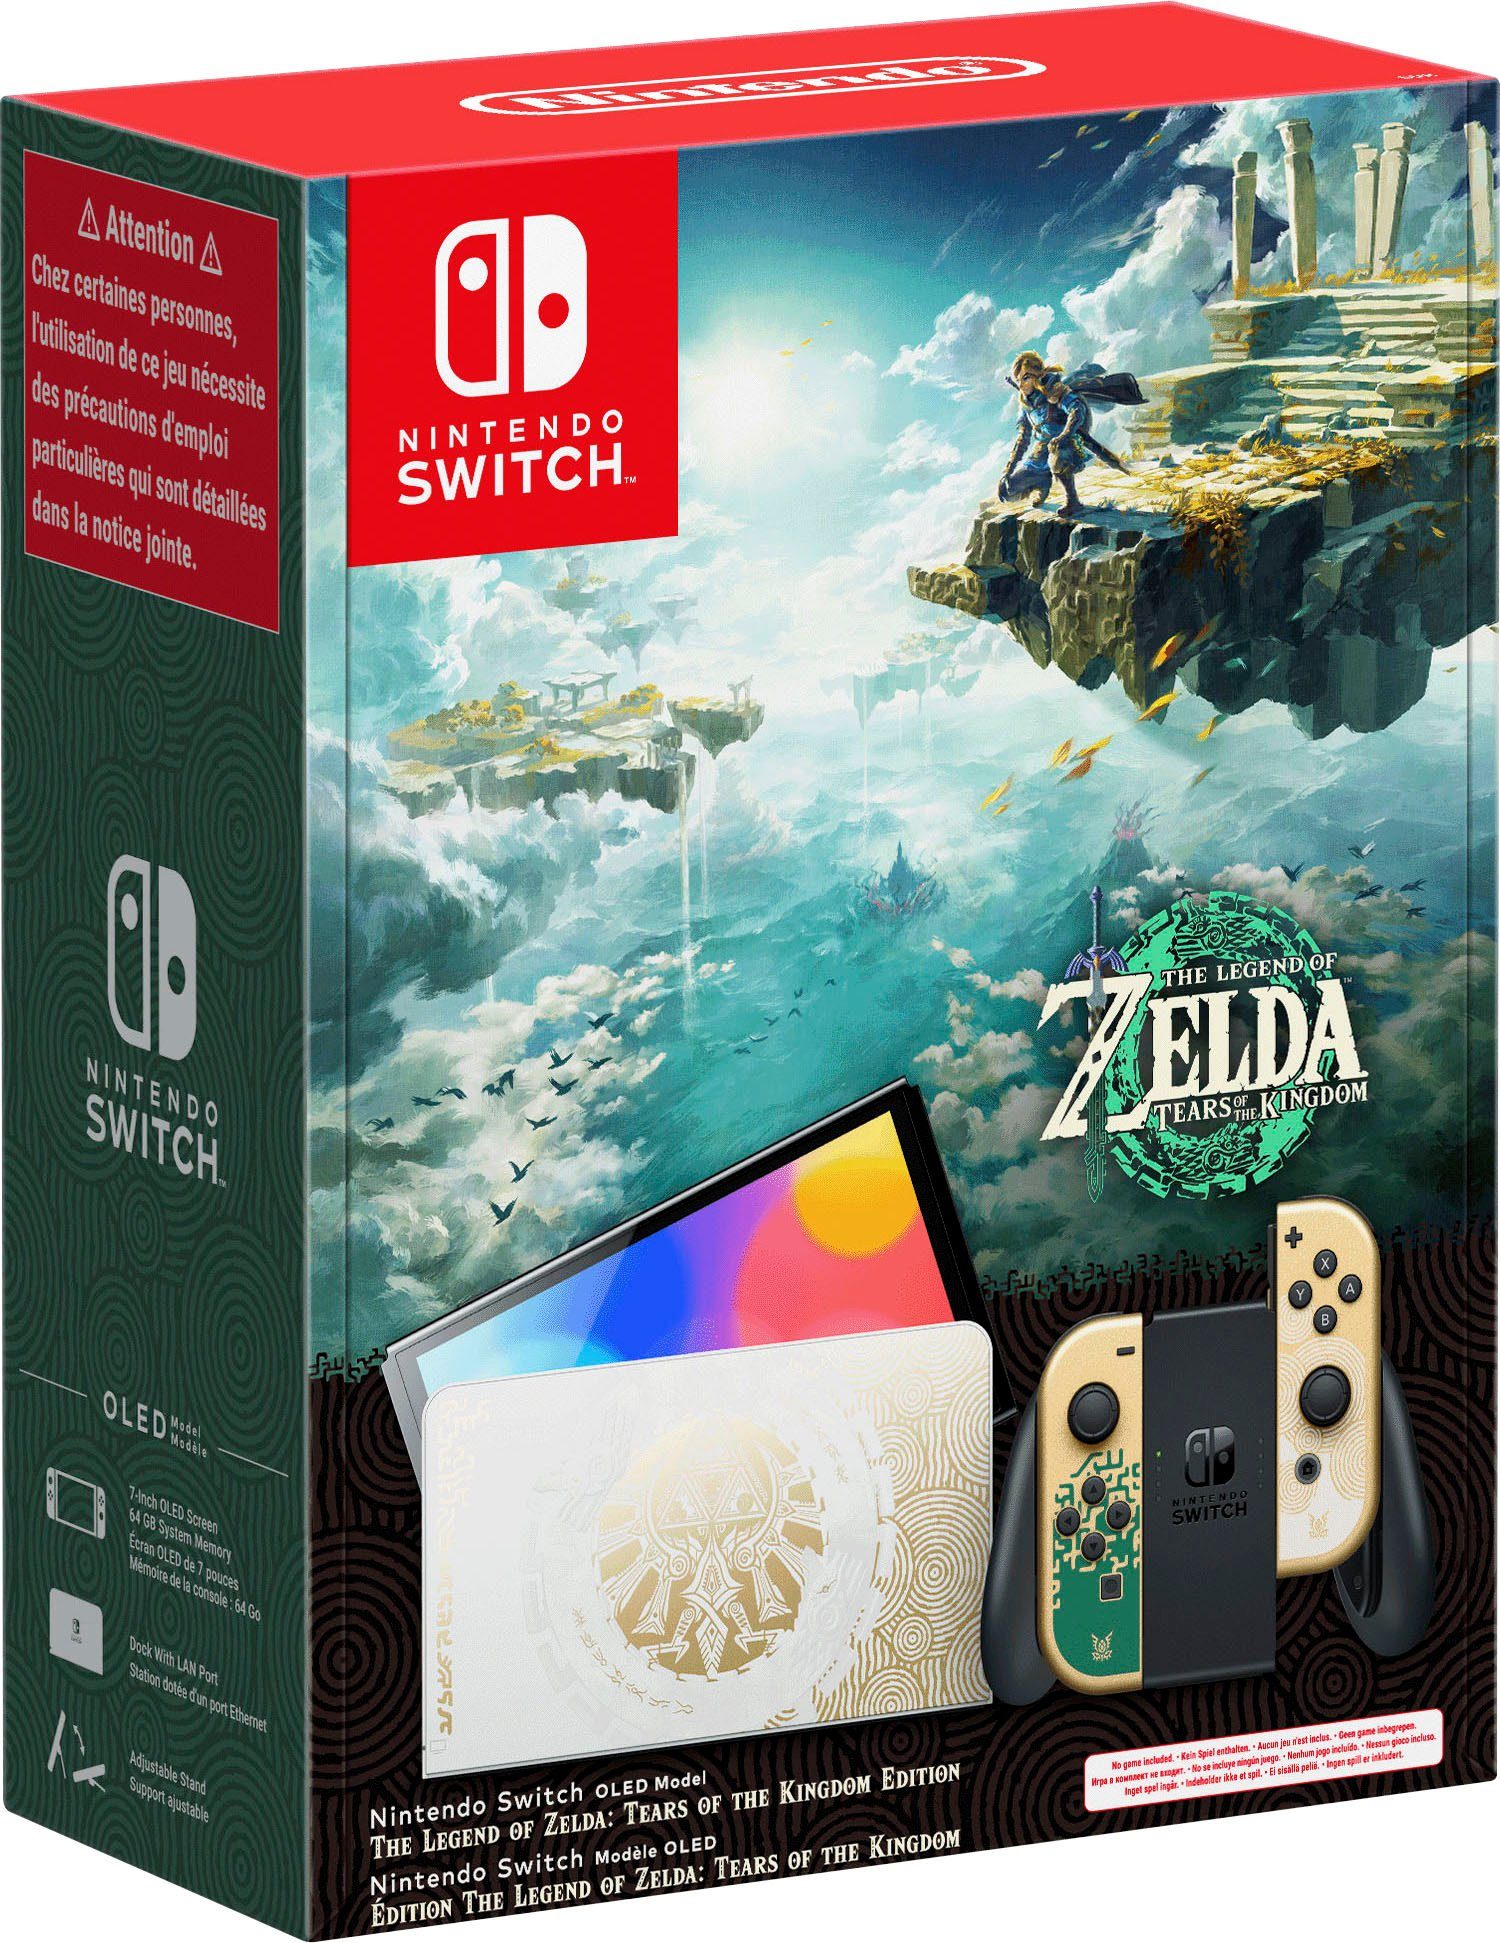 Nintendo Switch NSW OLED The Legend of Zelda: Tears of the Kingdom Edition  (kein Spiel im Lieferumfang)